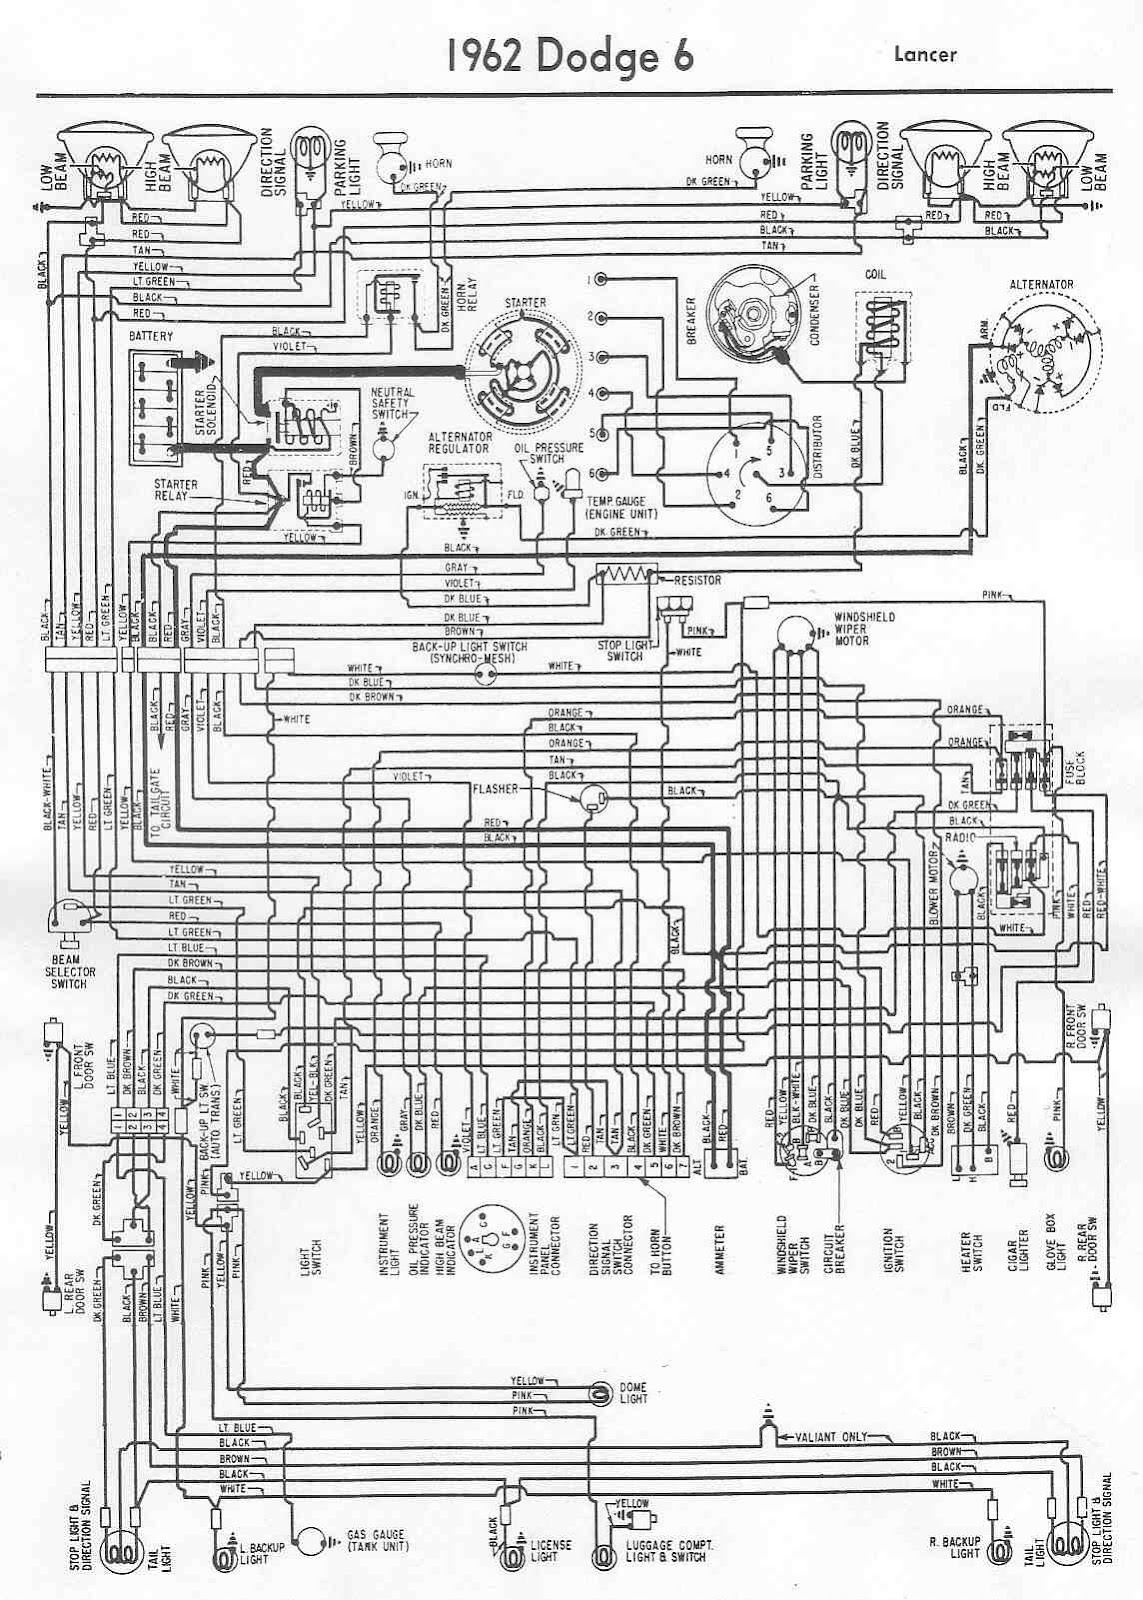 Dodge Lancer 1962 Complete Electrical Wiring Diagram